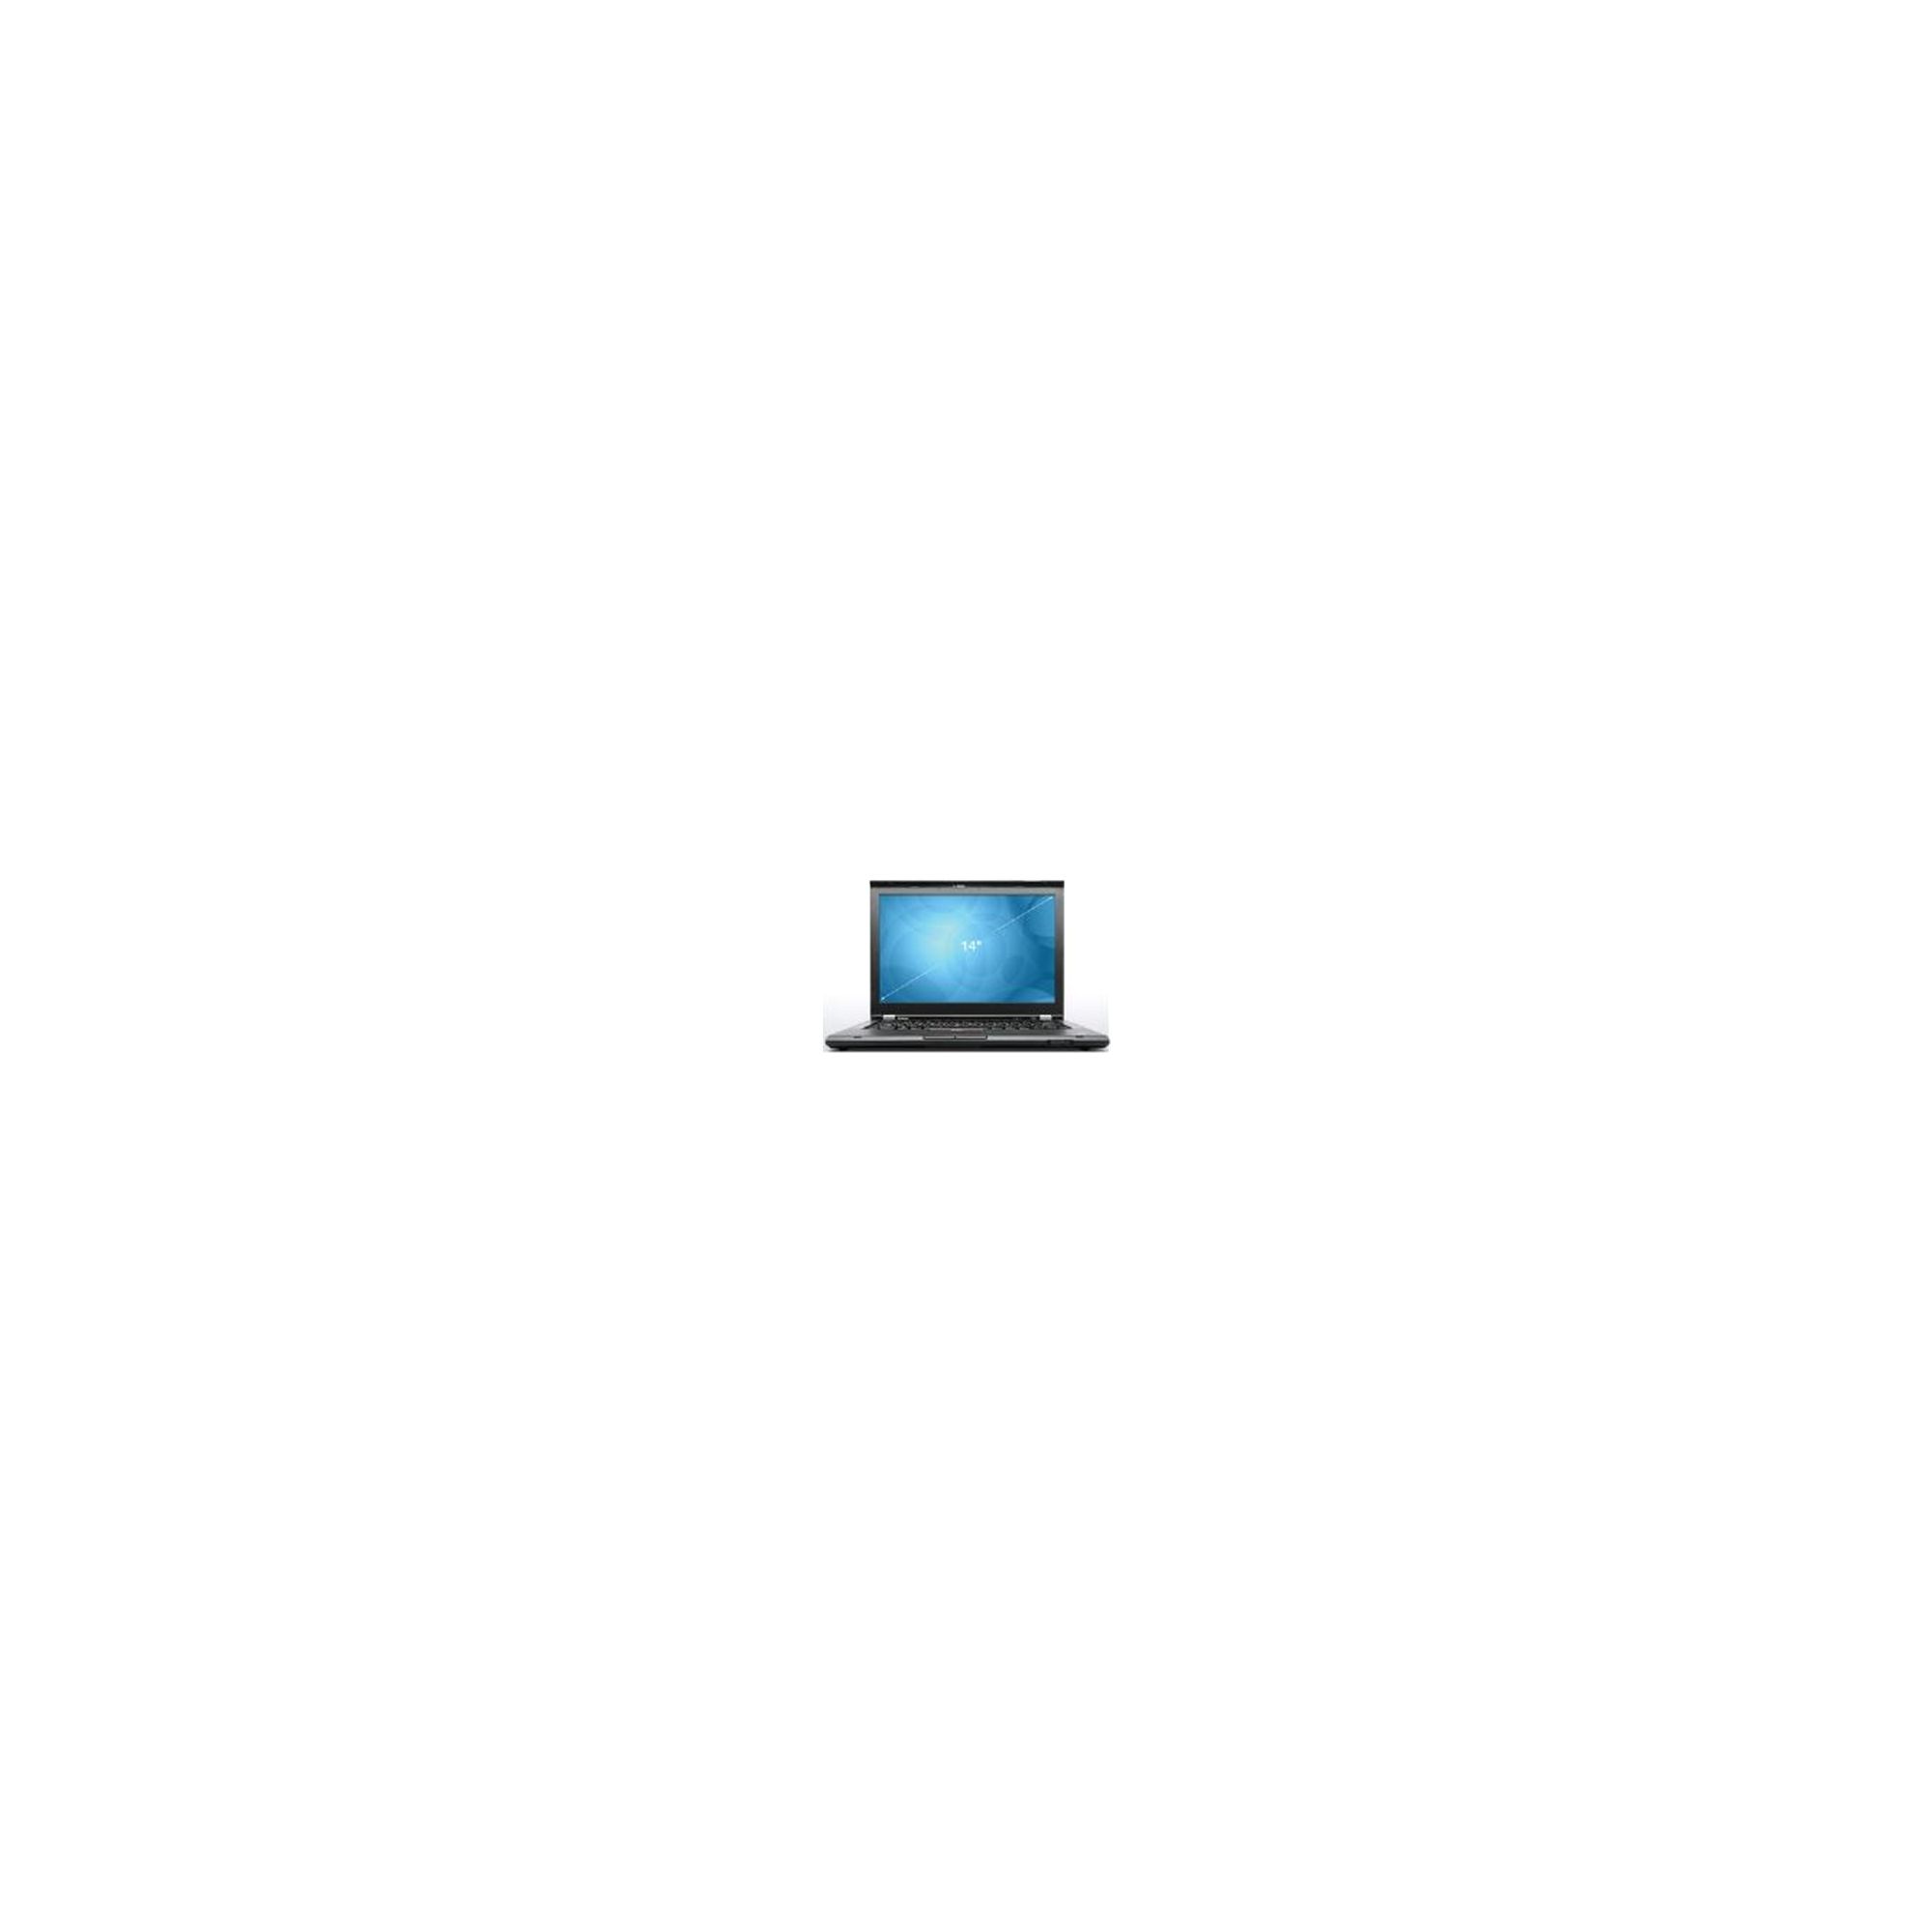 Lenovo ThinkPad T430 2344BDG (14.0 inch) Notebook Core i3 (3110M) 2.4GHz 4GB 500GB DVD±RW WLAN BT Webcam Windows 7 Pro 64-bit/Windows 8 Pro 64-bit at Tesco Direct